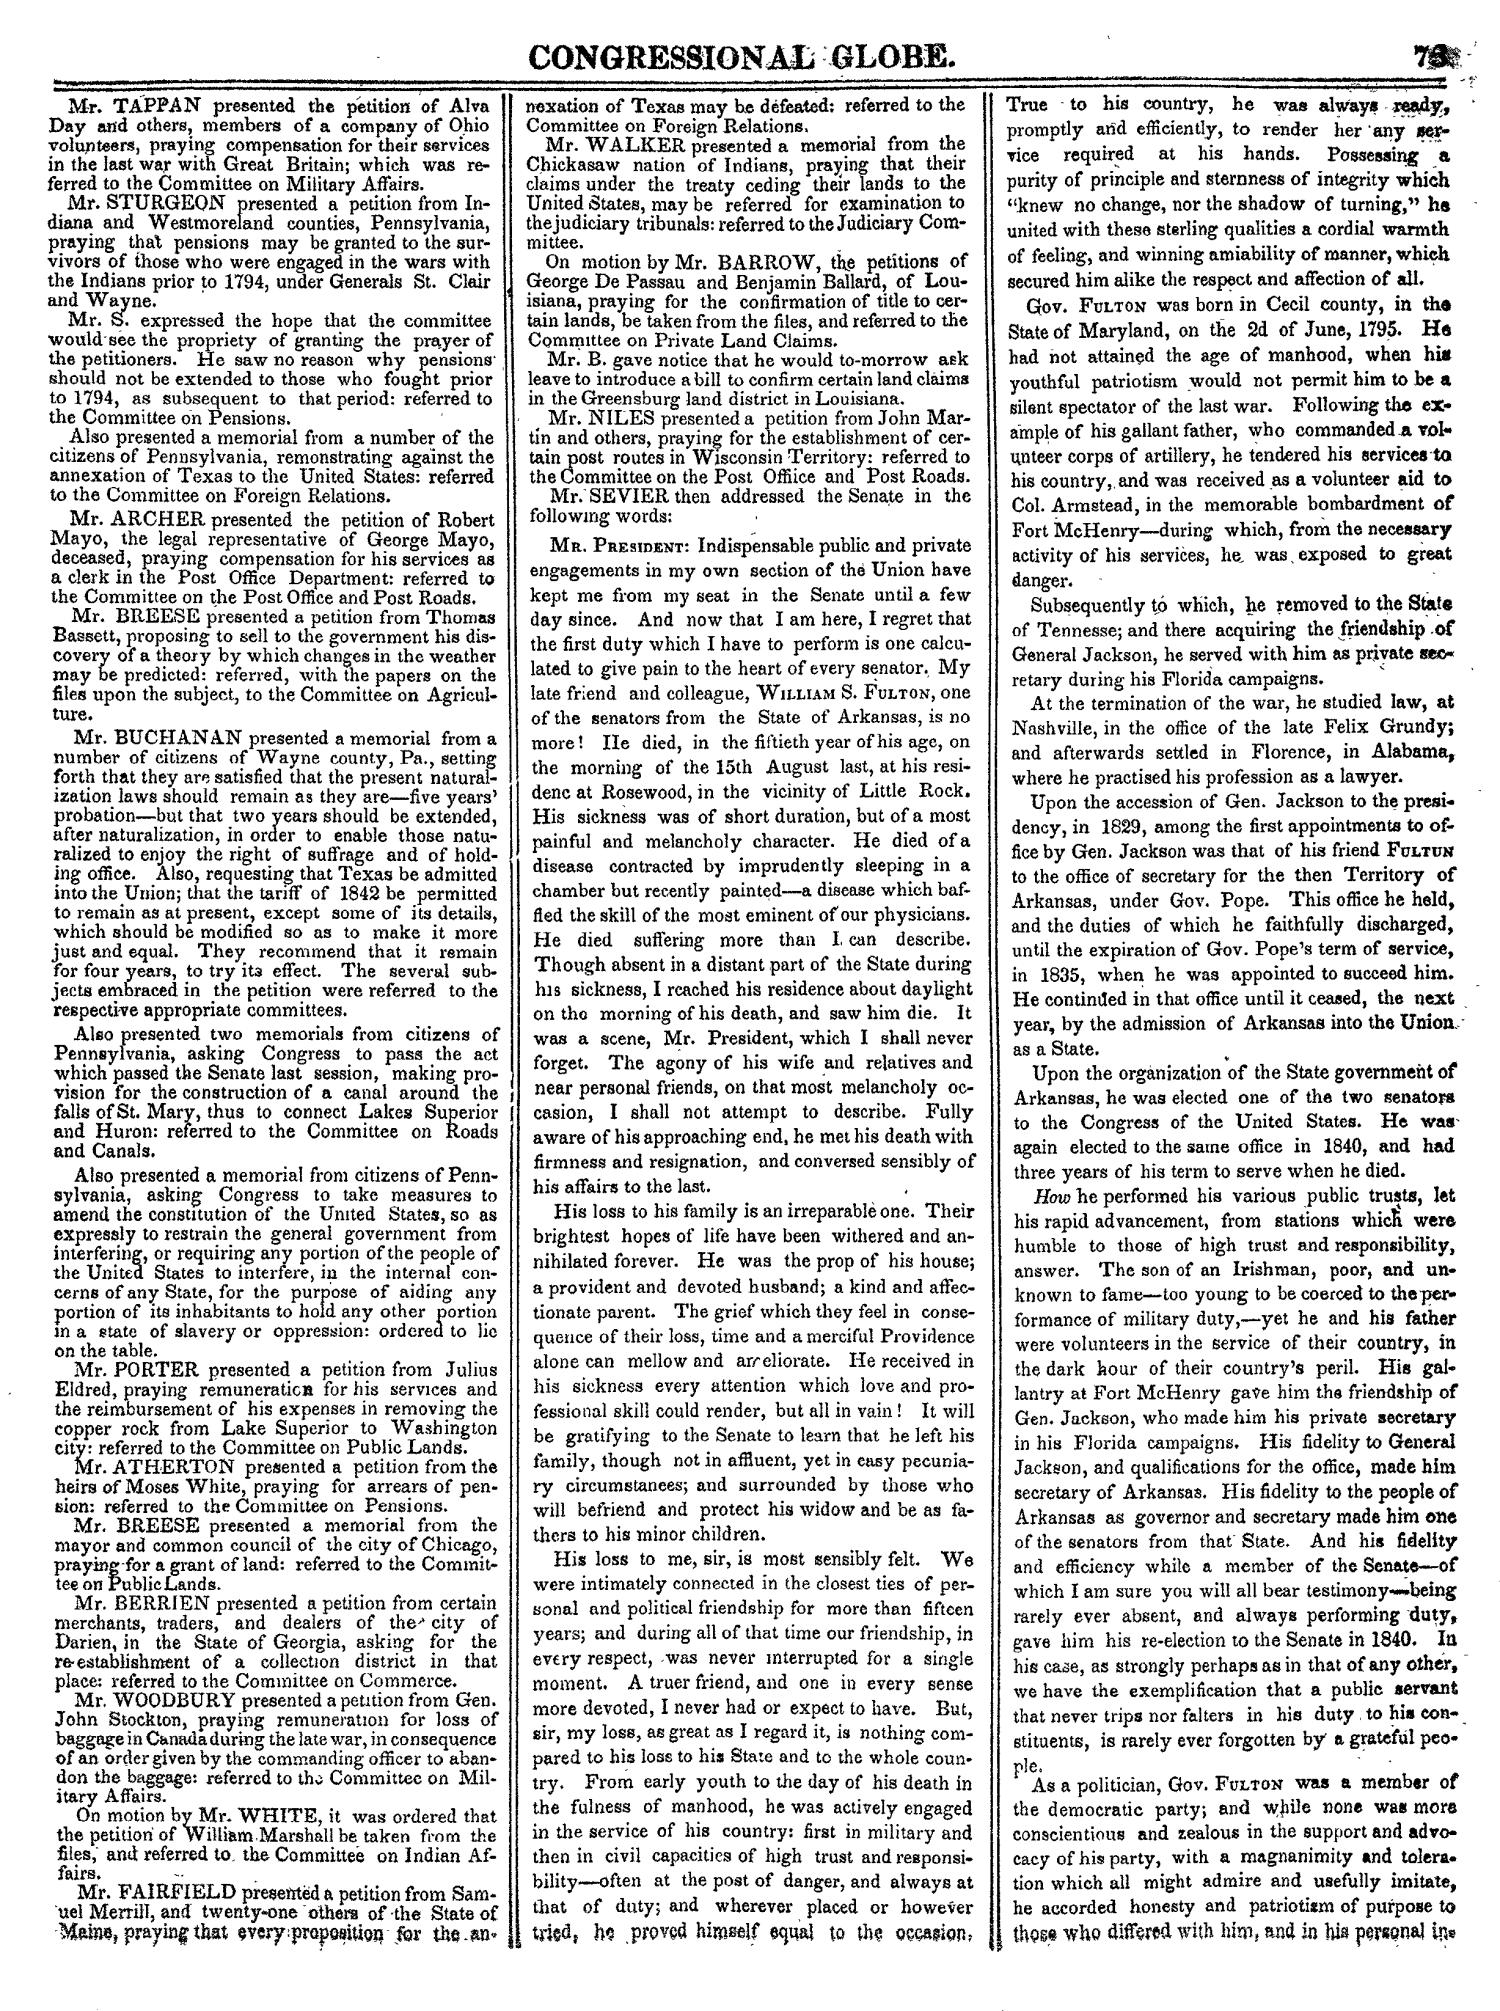 The Congressional Globe, Volume 14: Twenty-Eighth Congress, Second Session
                                                
                                                    73
                                                